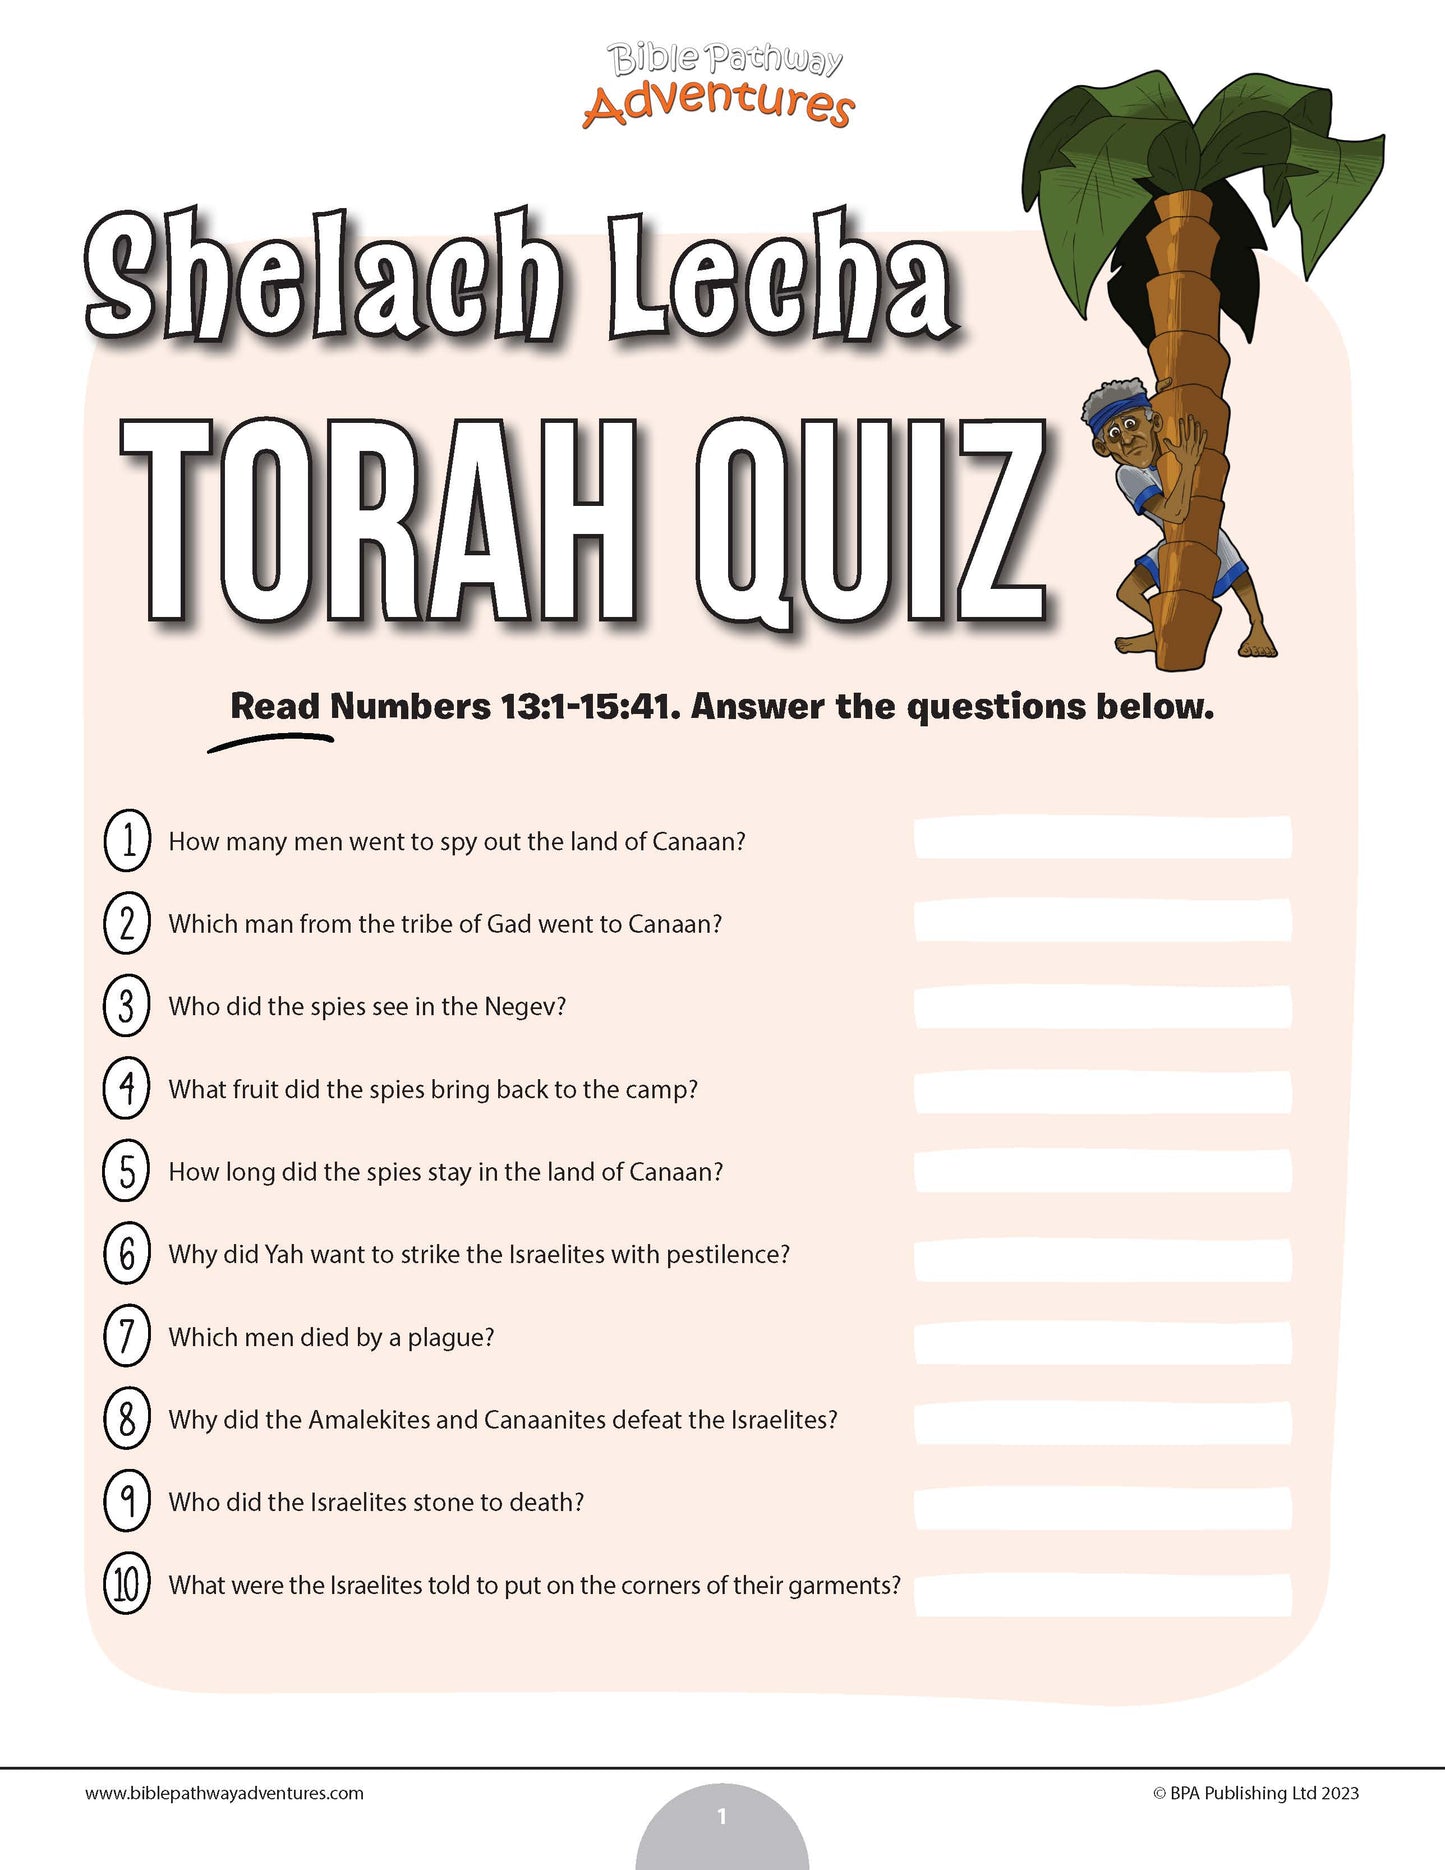 Shelach Lecha Torah quiz (PDF)